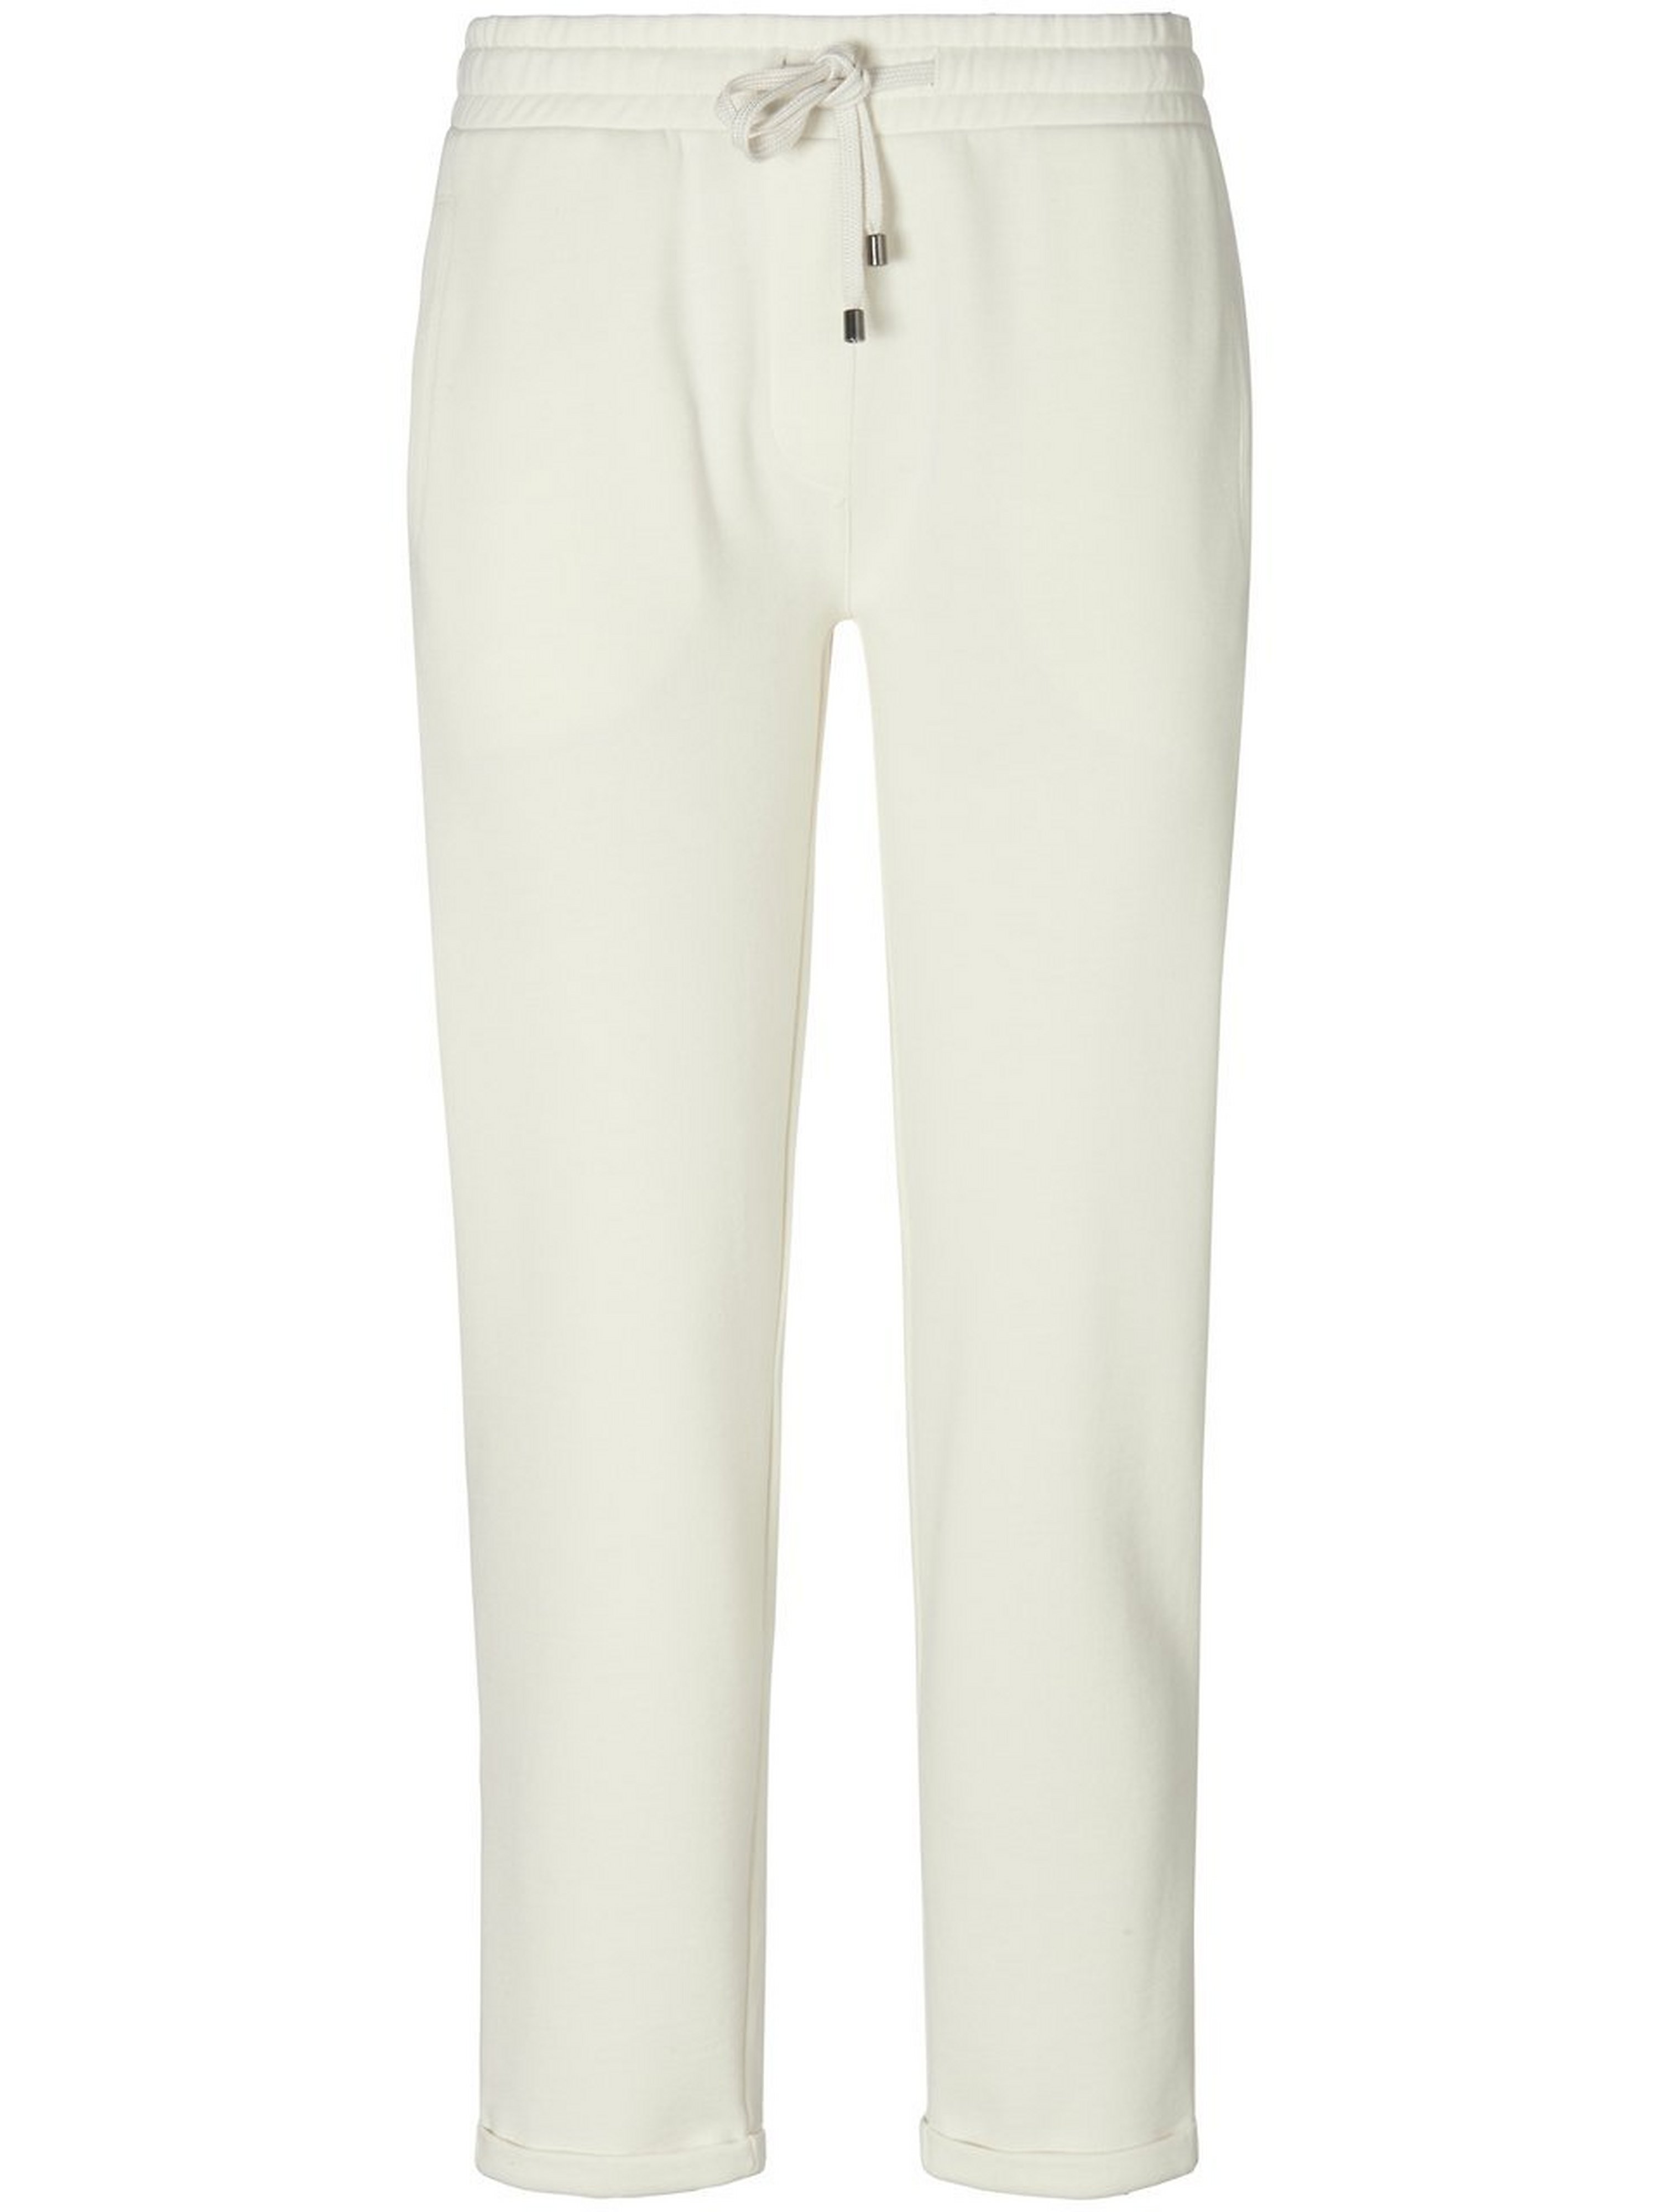 Le pantalon  Juvia blanc taille 42